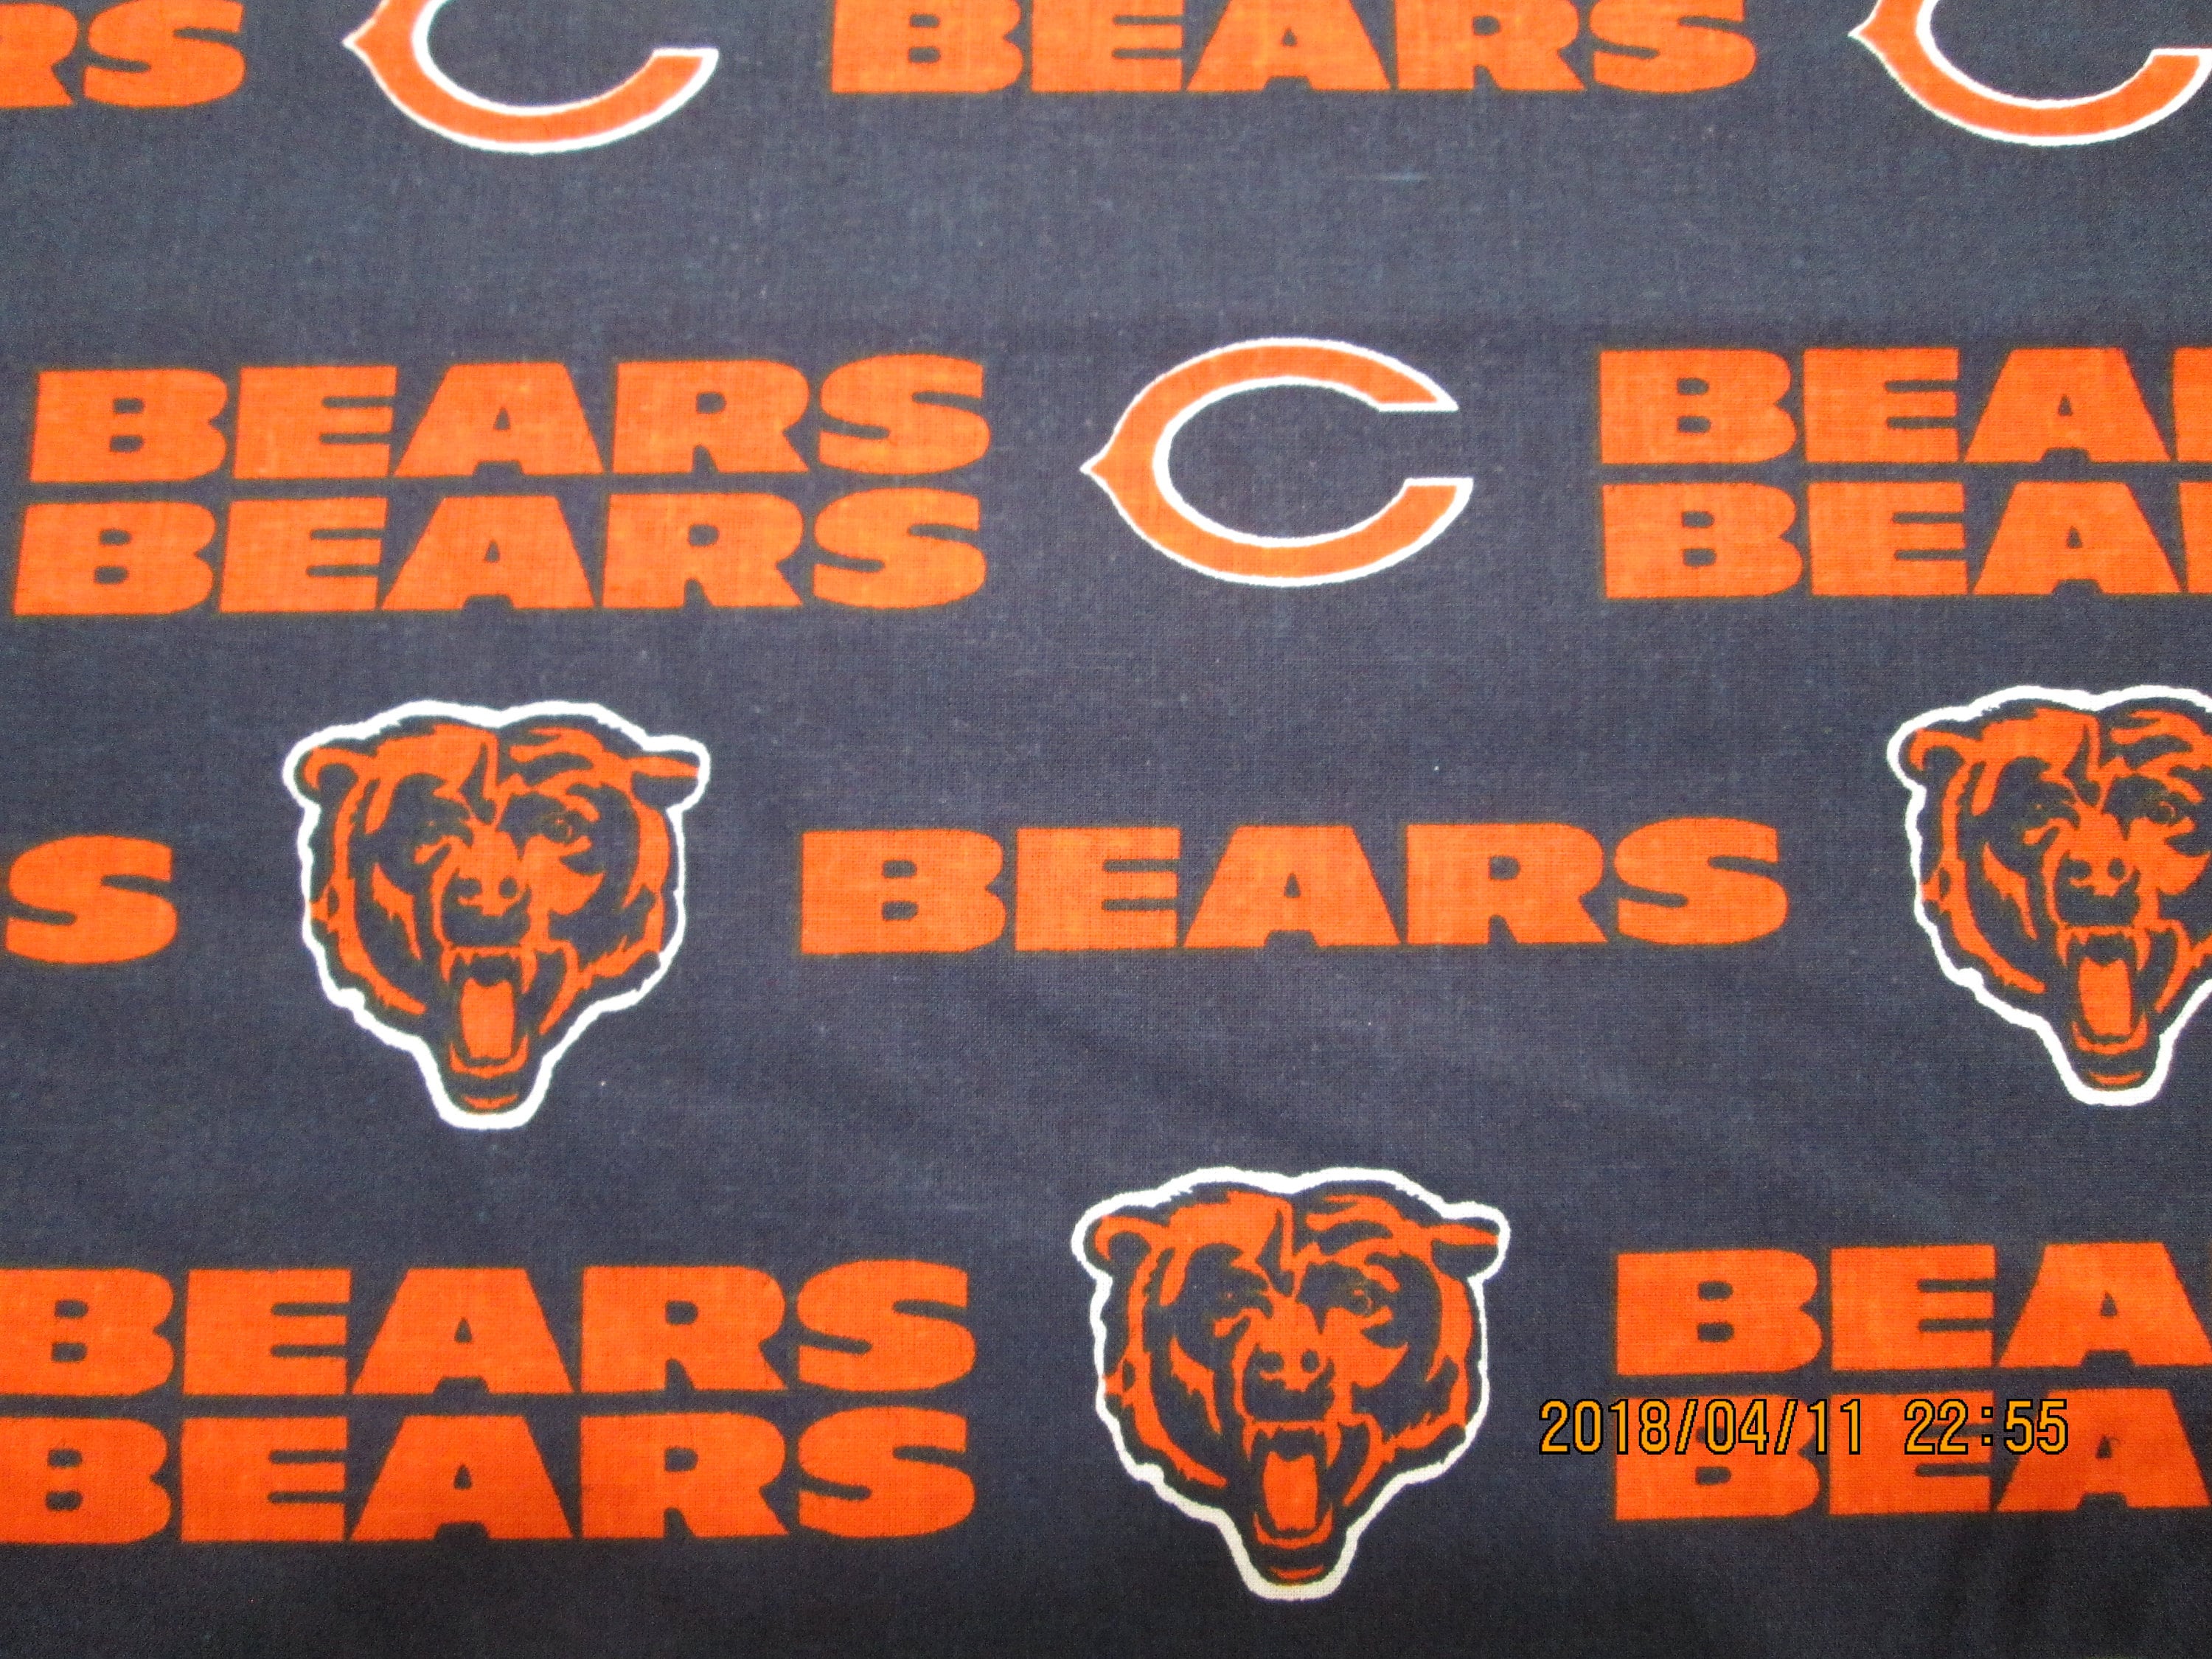 Cotton Fabric - Sports Fabric - NFL Football Chicago Bears Distressed Look  Blue Orange - 4my3boyz Fabric